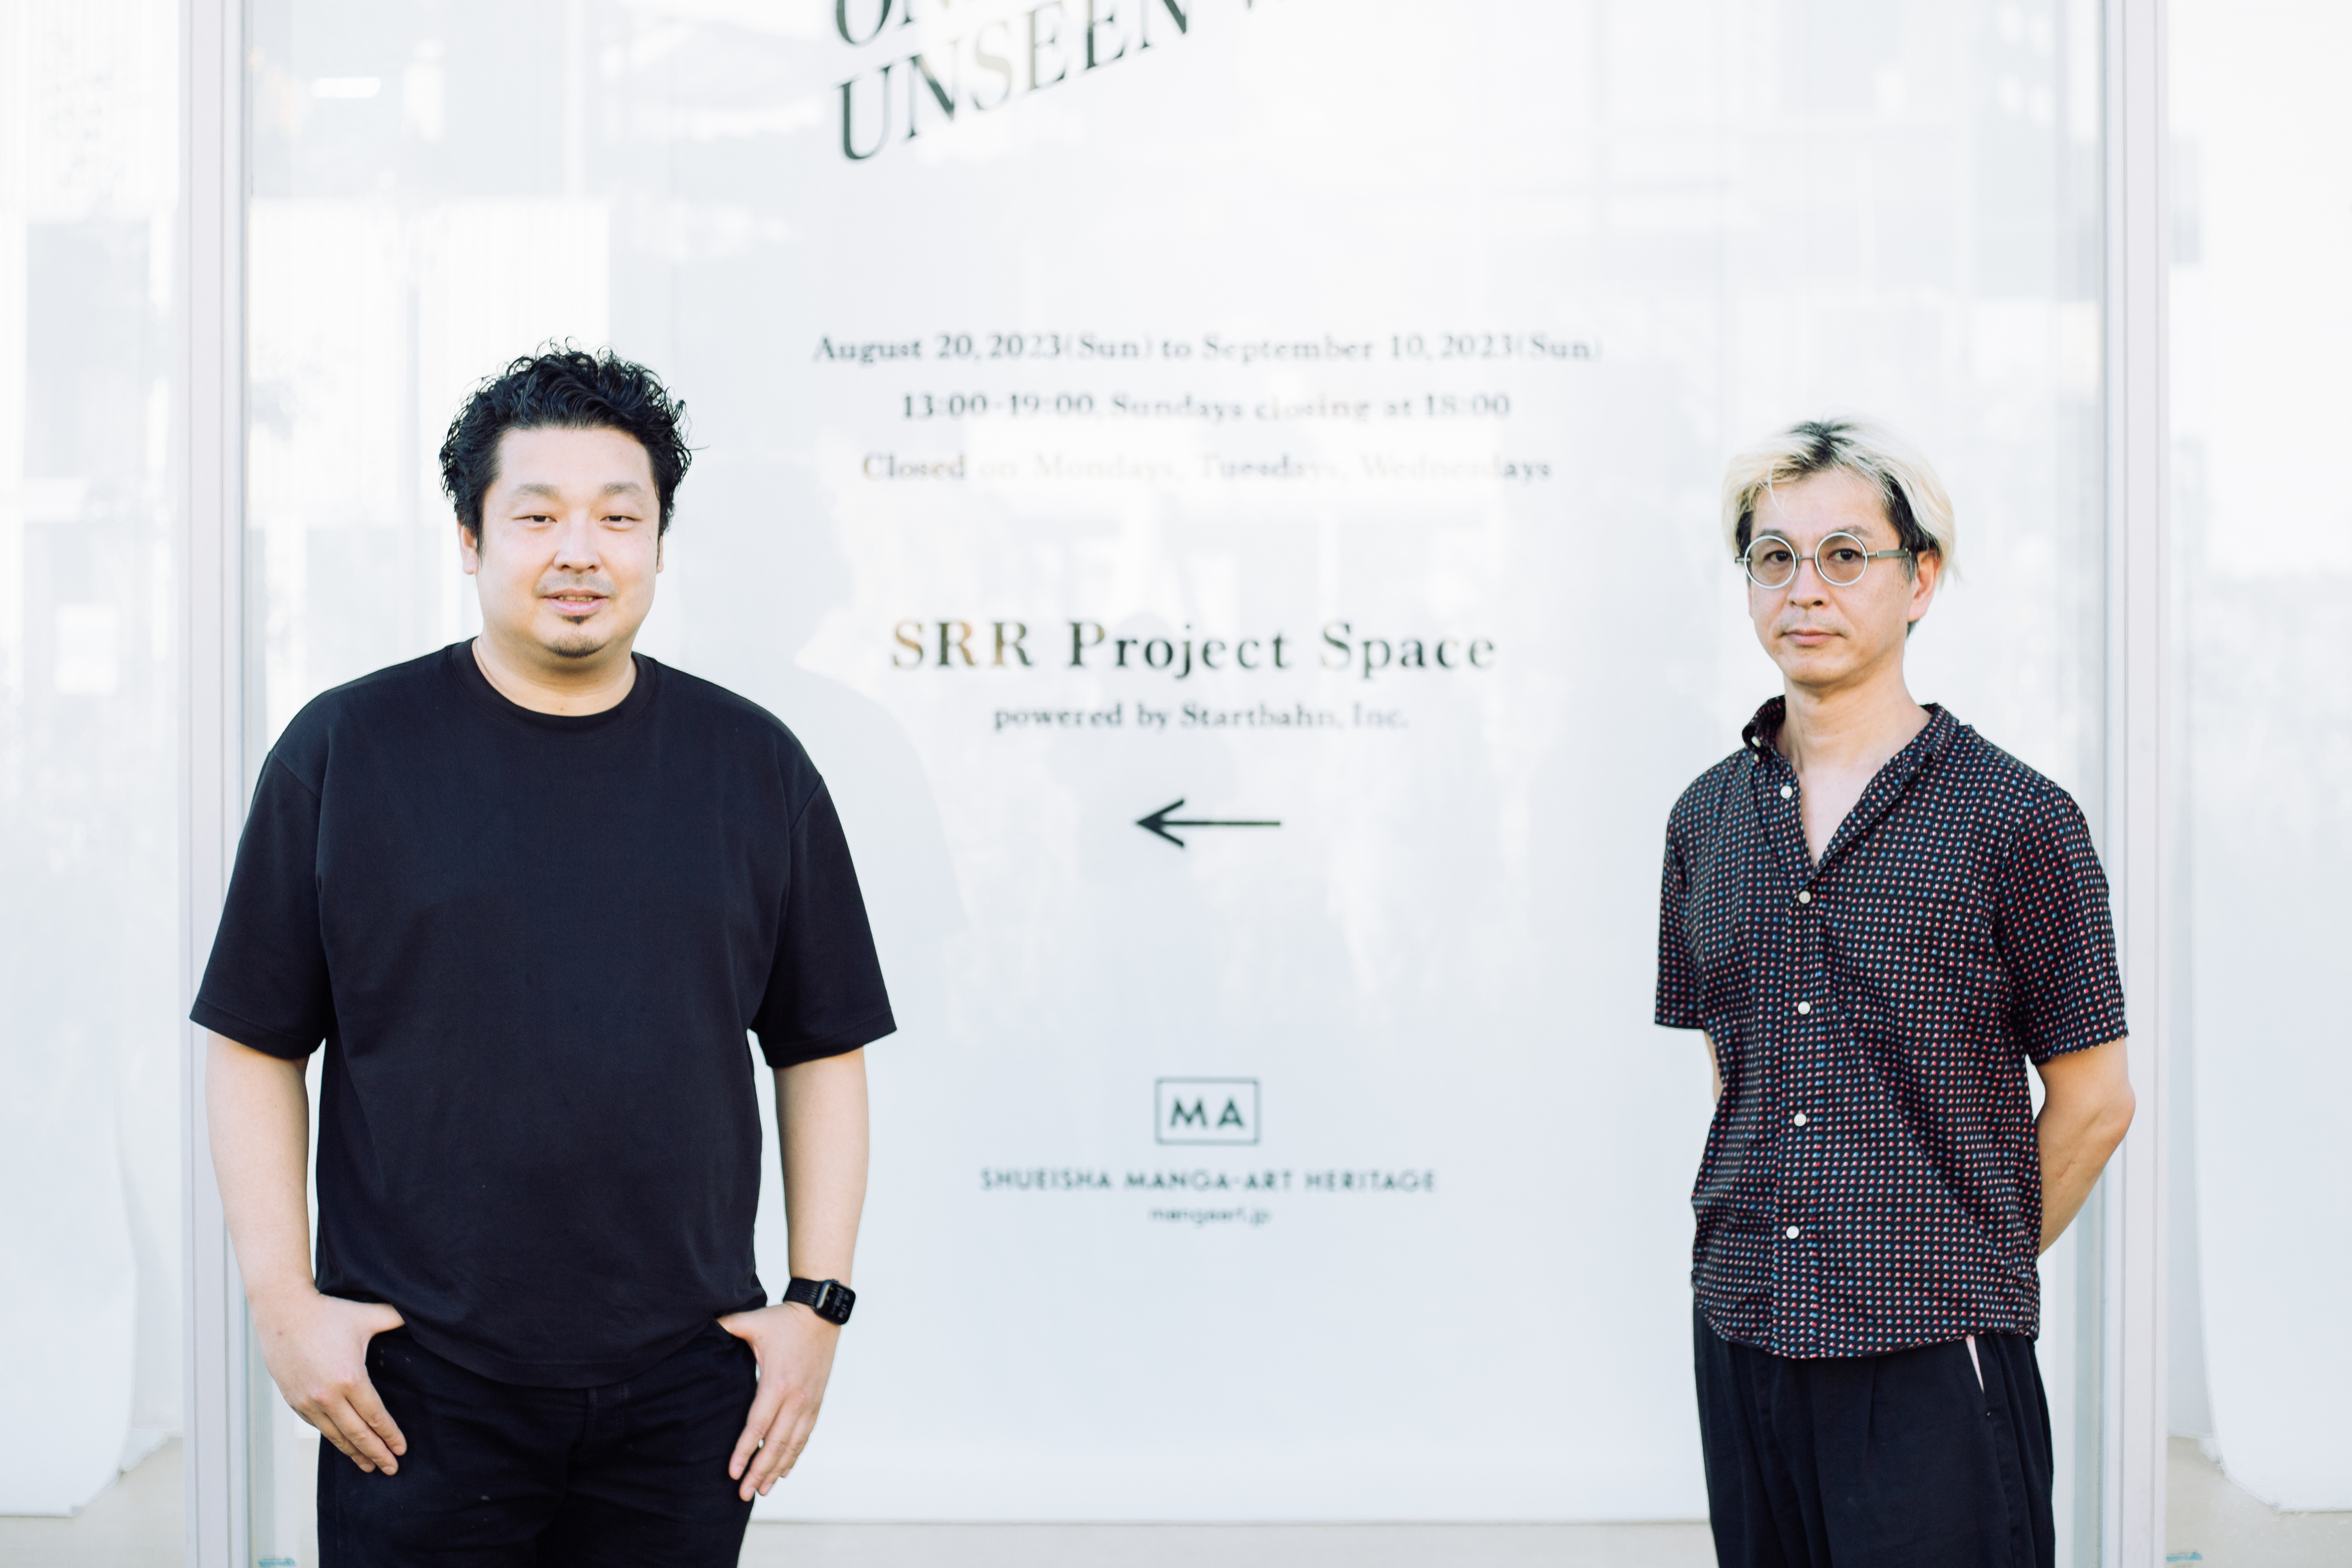 Startbahn's SRR Project Space to Hold “Eiichiro Oda “ONE PIECE